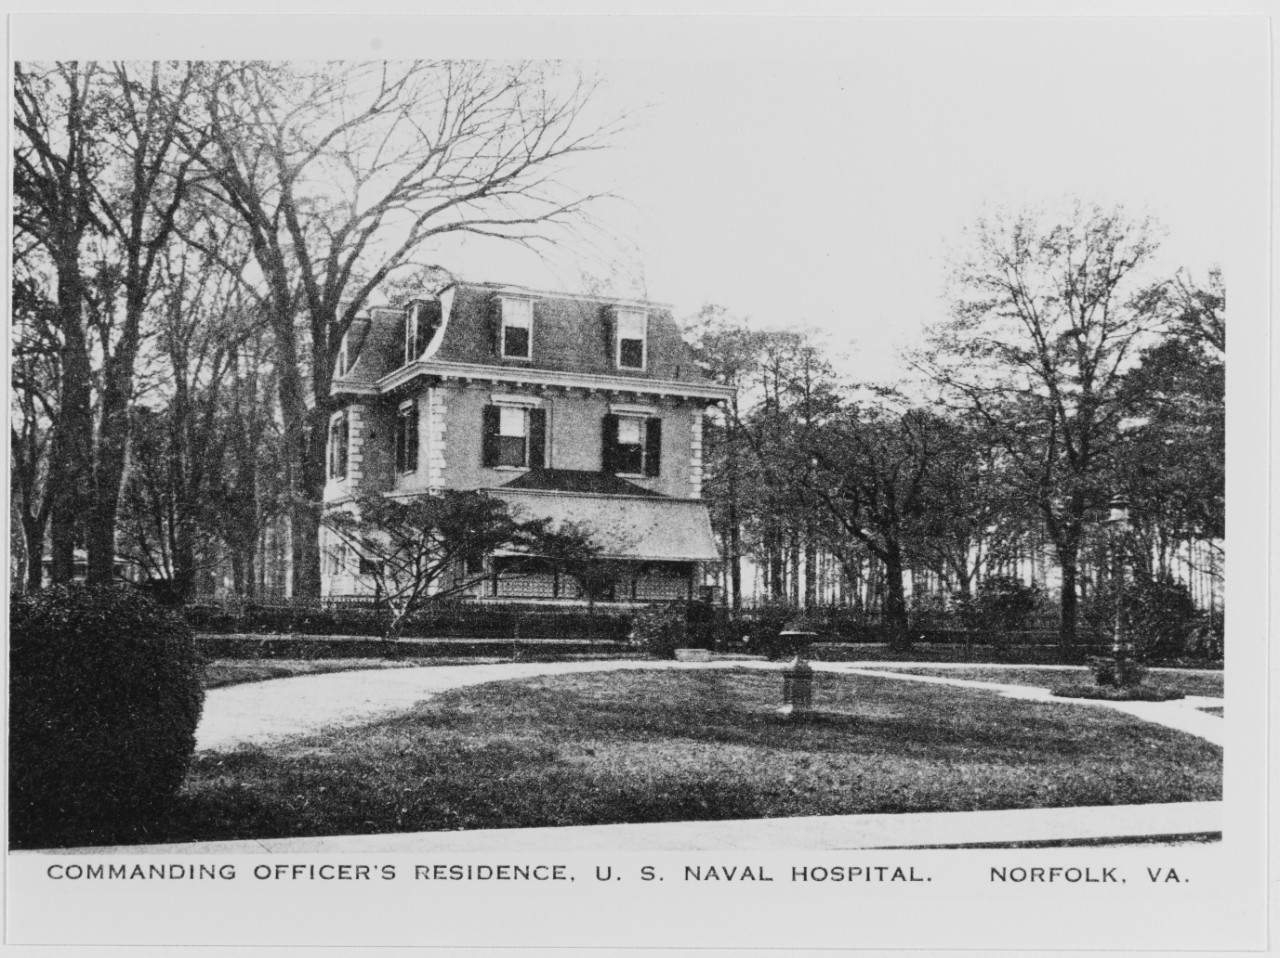 Naval Hospital, Norfolk, Virginia. Commanding Officer's Residence, circa 1918